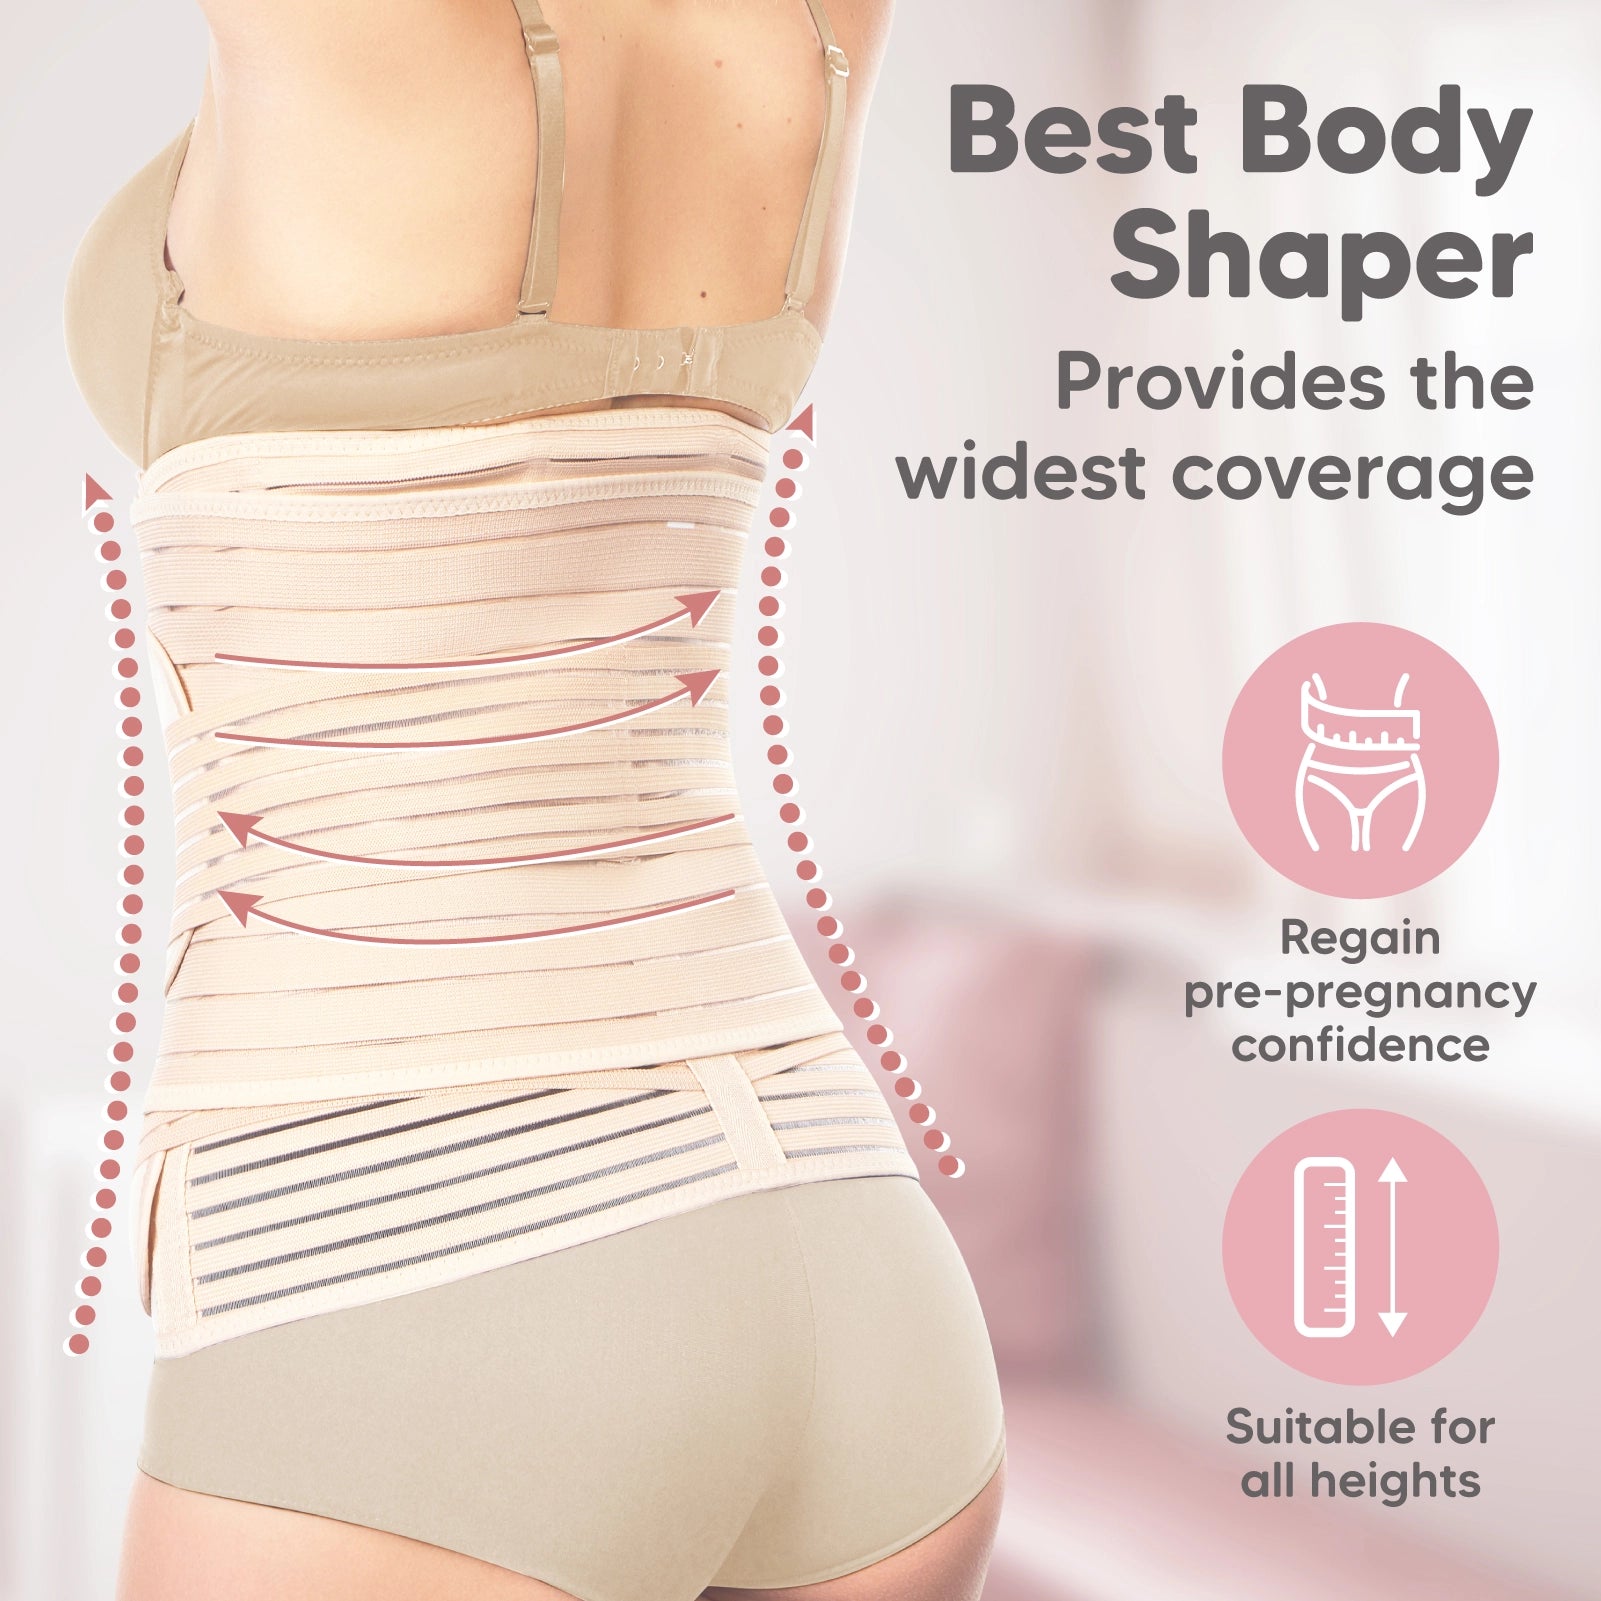 You nurture the baby. We'll nurture the belly. — My corsets were a huge  help regaining my pre-baby